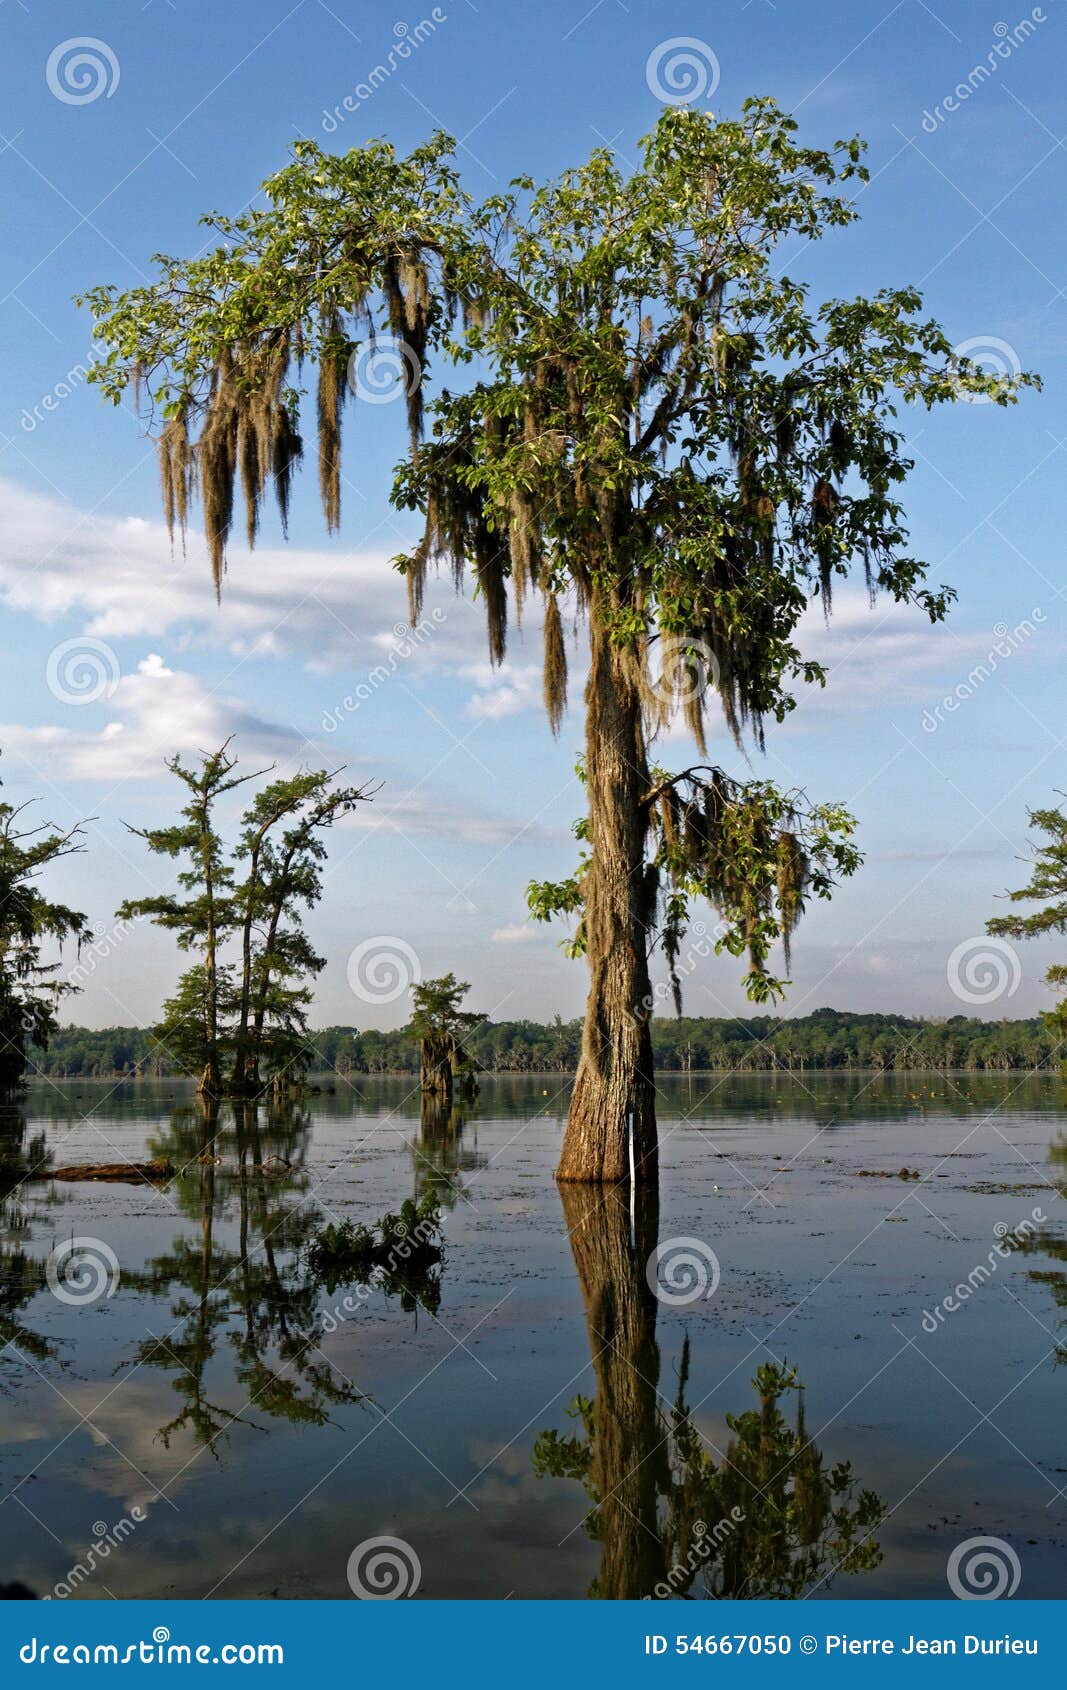 tree in the bayou